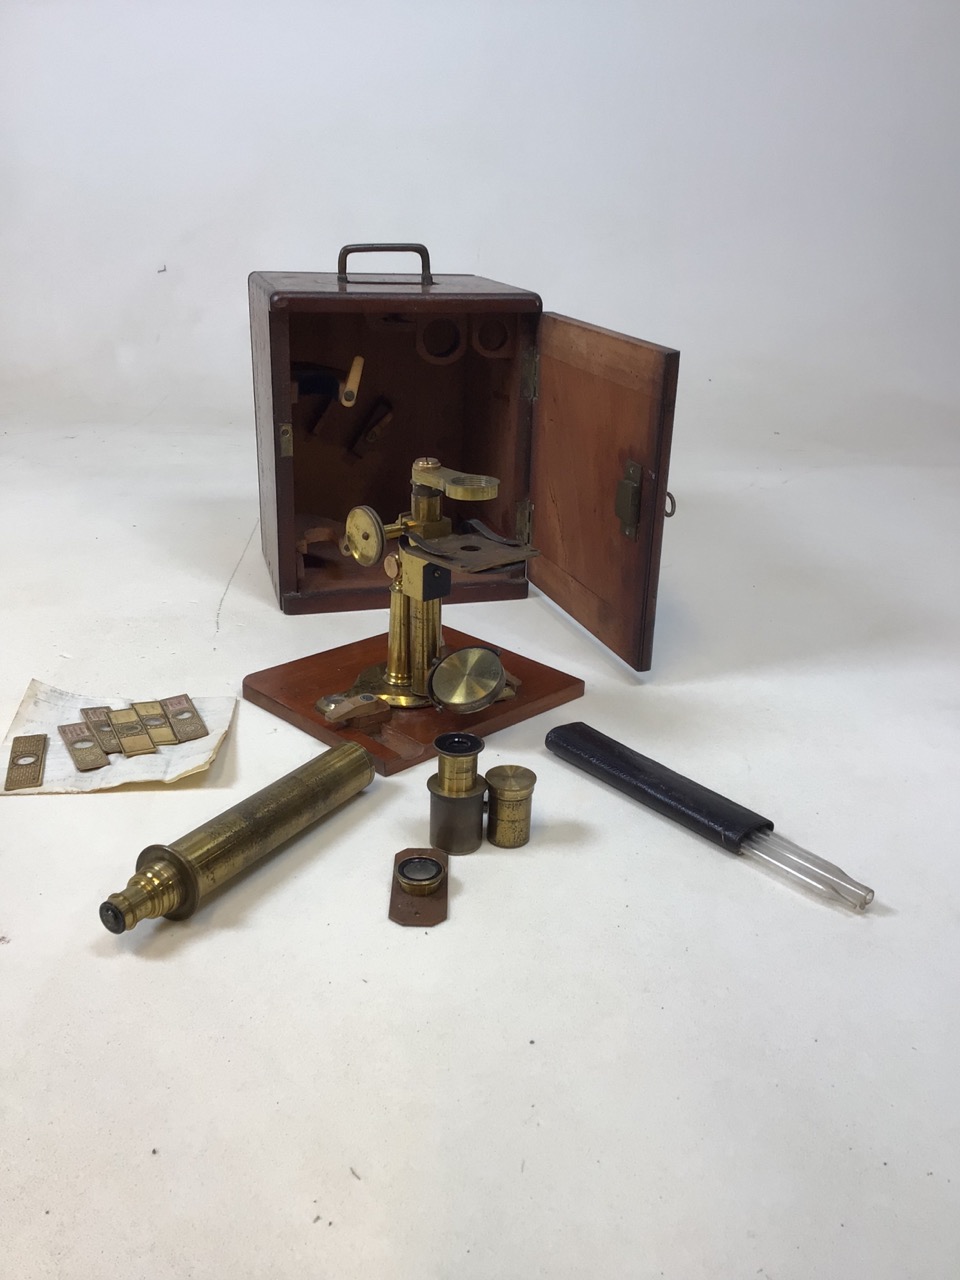 A brass microscope by Negretti & Zambra in original mahogany case with lenses and slides W:18cm x